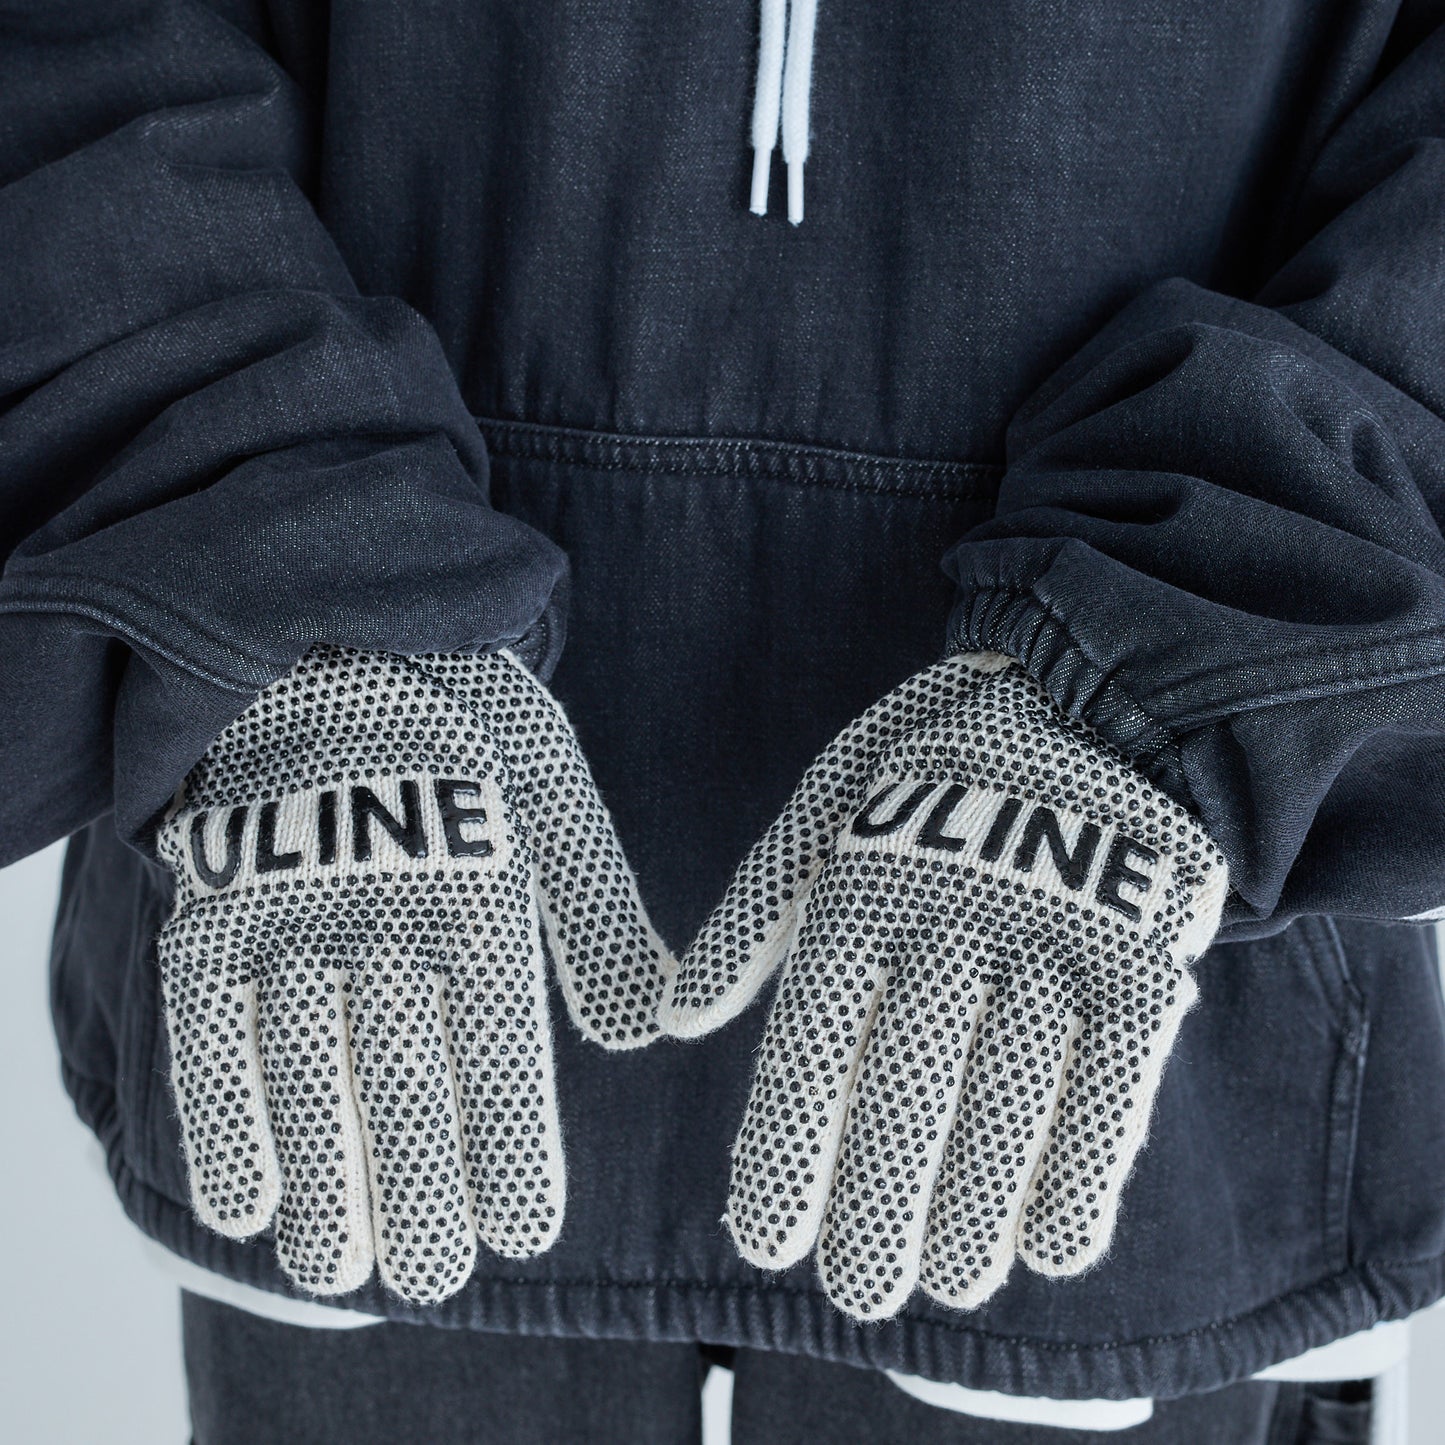 ULINE work glove